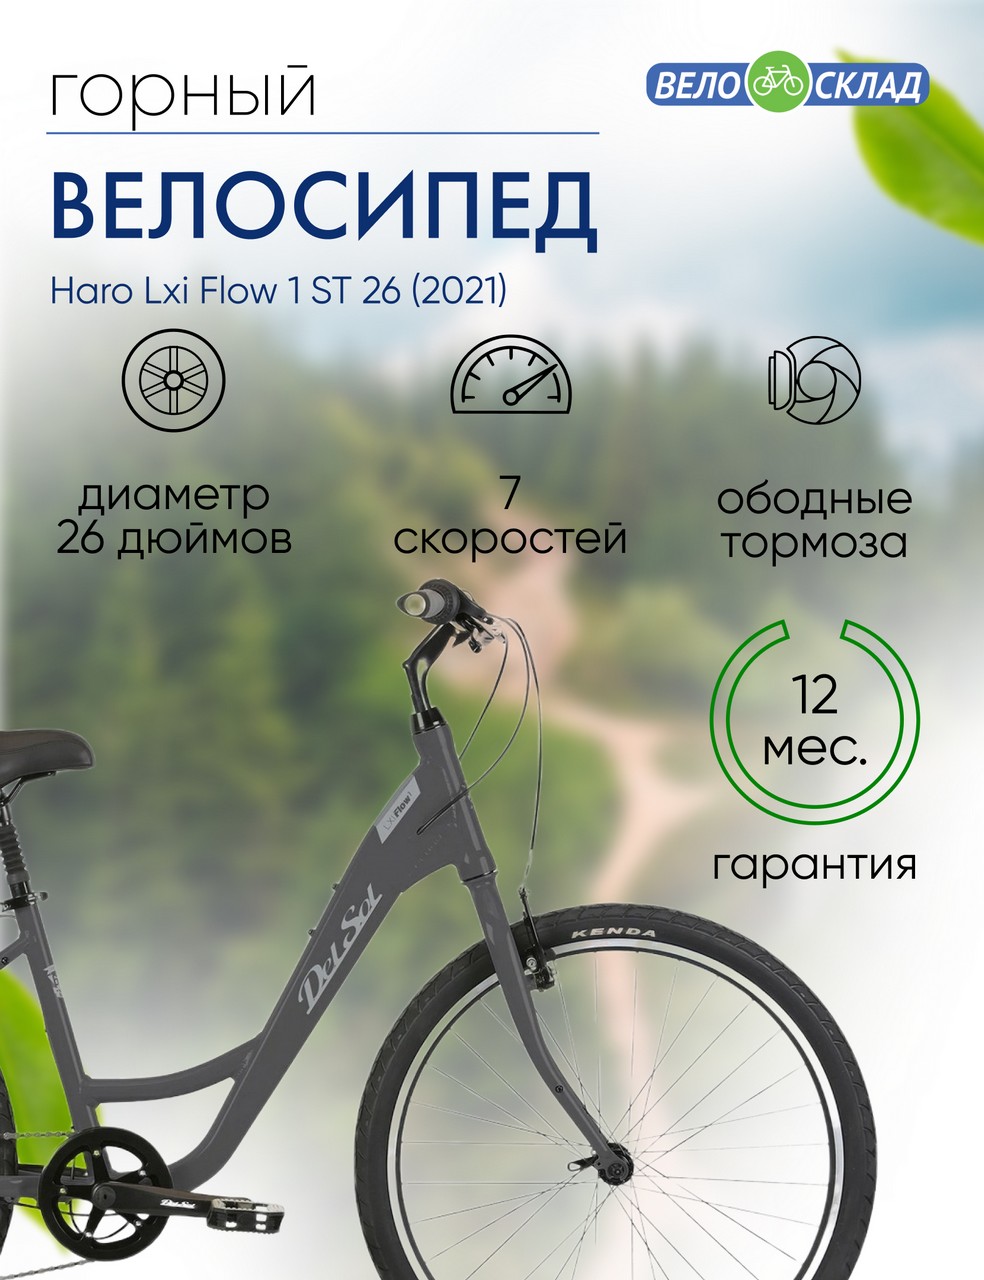 Женский велосипед Haro Lxi Flow 1 ST 26, год 2021, цвет Серебристый, ростовка 15